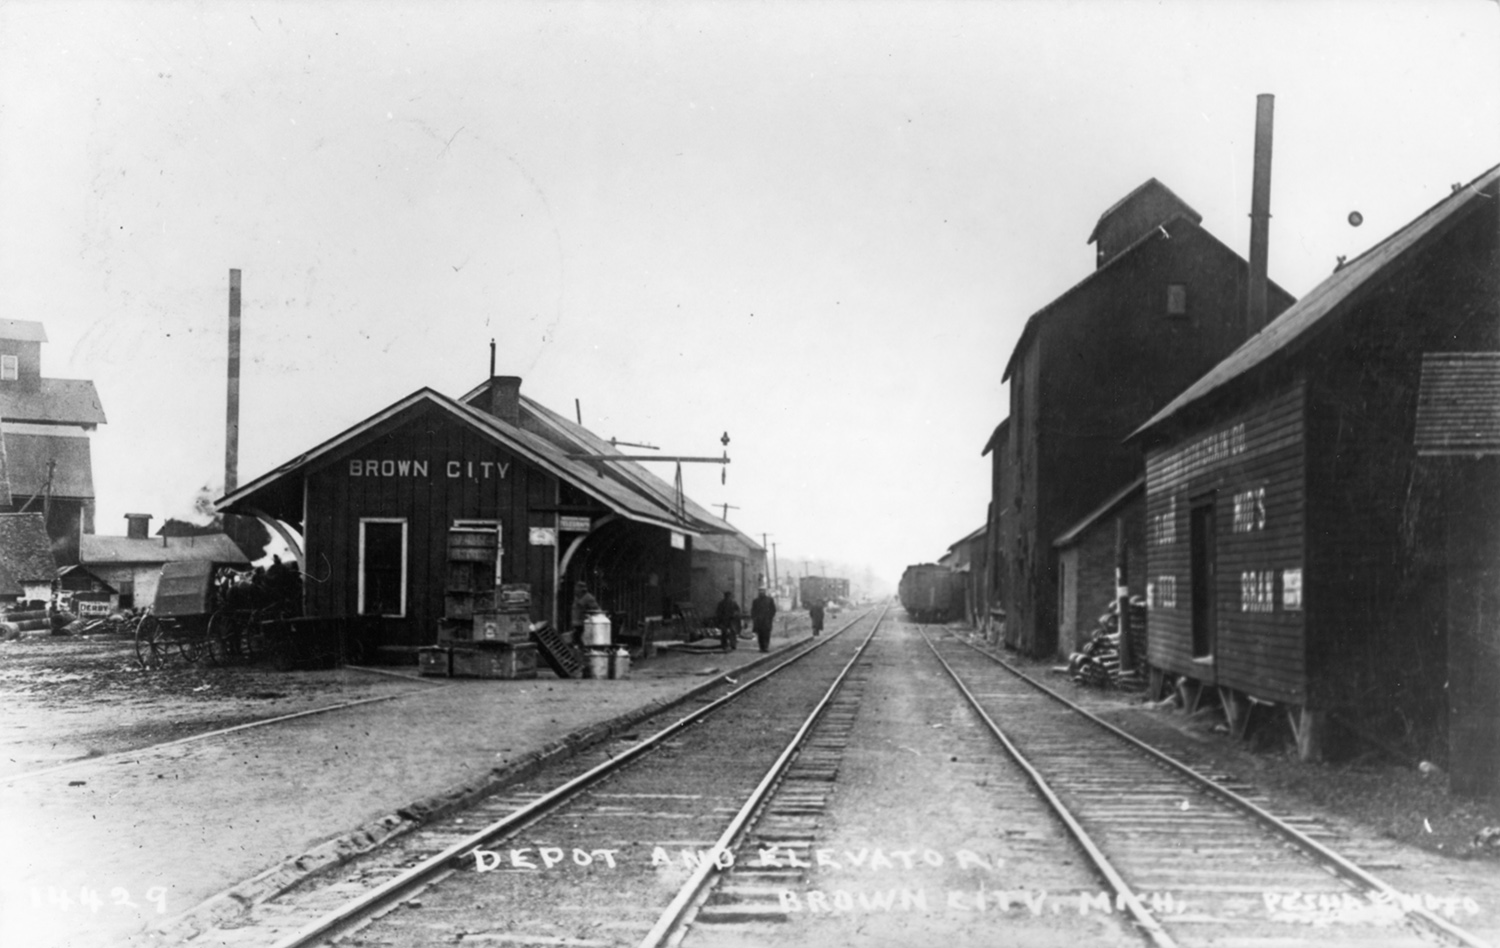 PM Brown City Depot